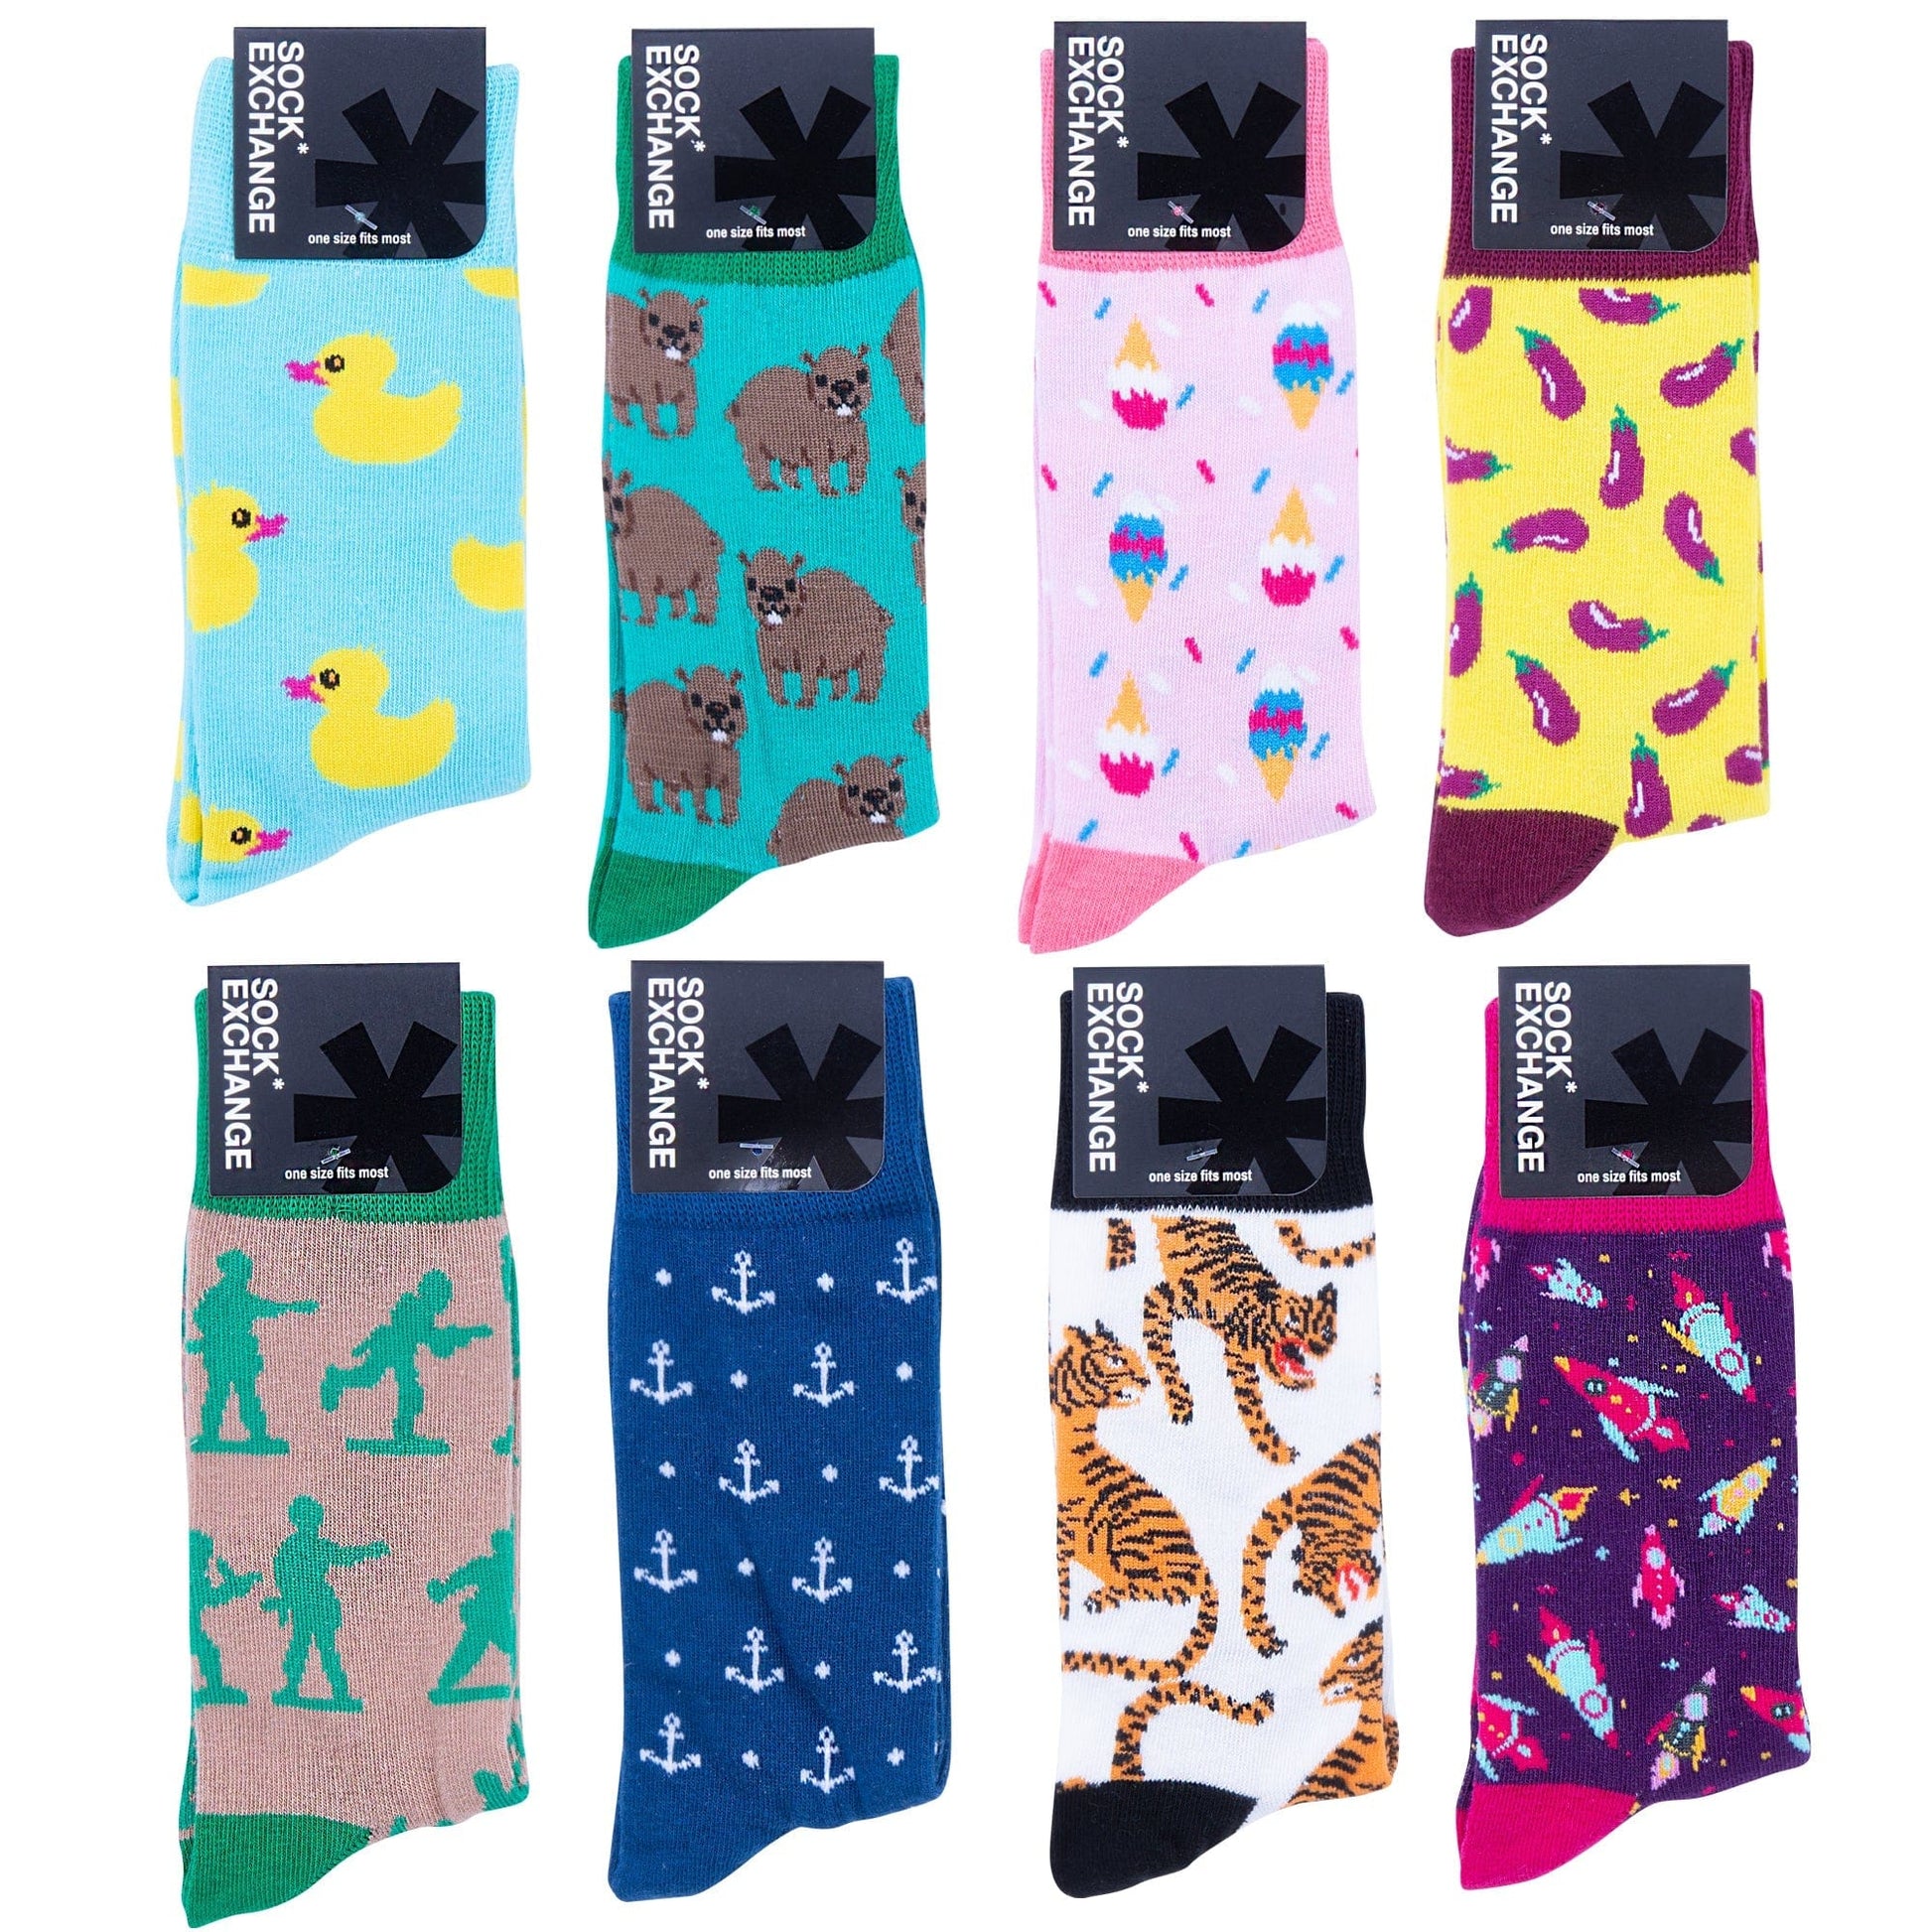 Sock Exchange Socks Wholesale 480 Novelty Socks and Display (RRP $4.95 or $9.95 for 3)